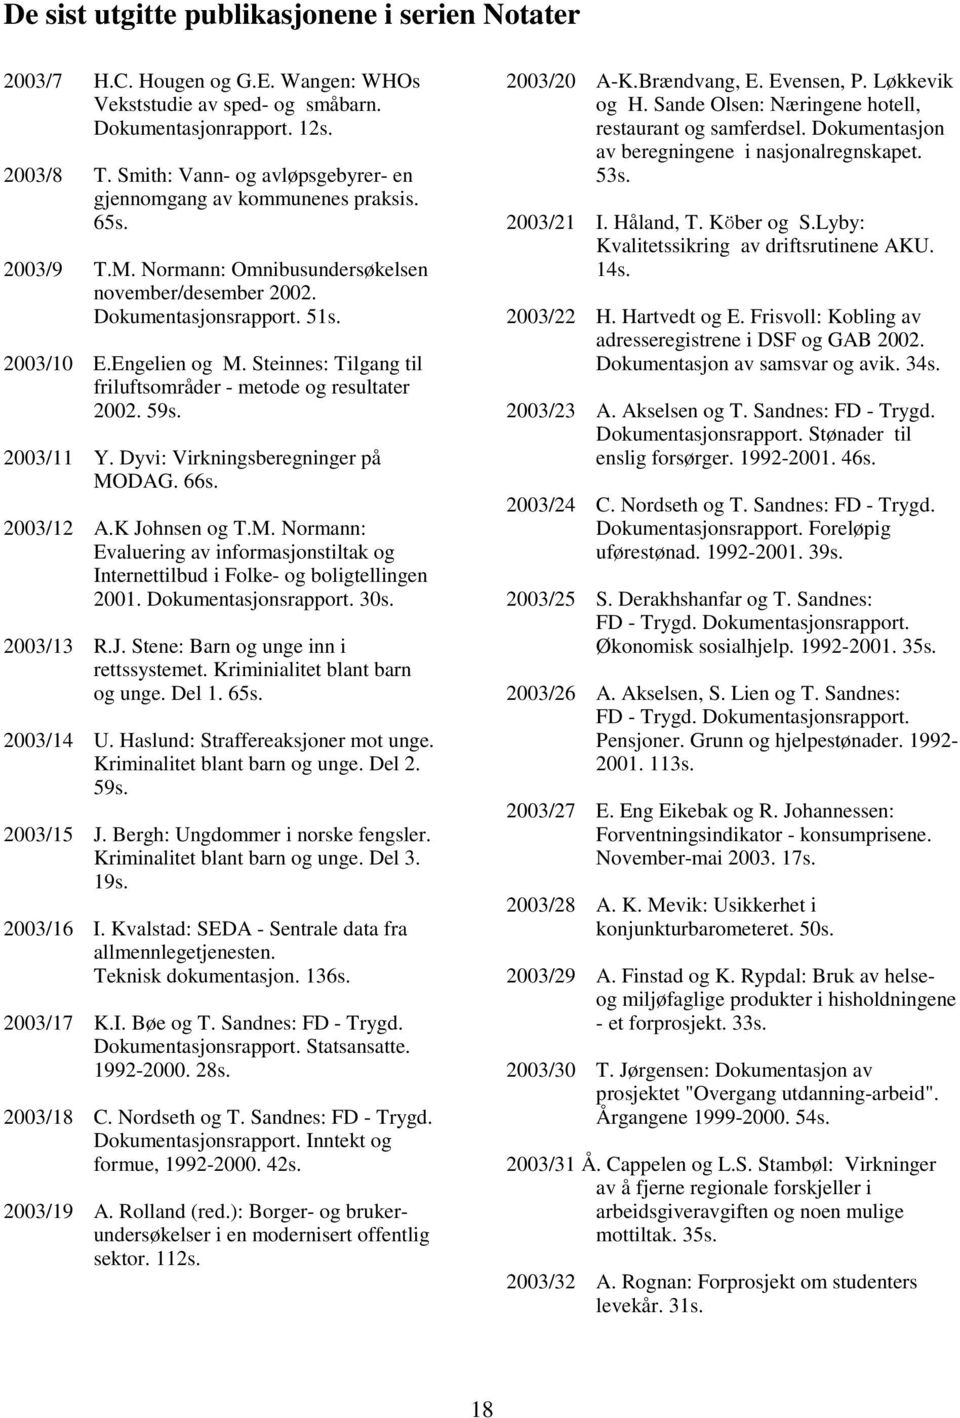 Steinnes: Tilgang til friluftsområder - metode og resultater 2002. 59s. 2003/11 Y. Dyvi: Virkningseregninger på MO